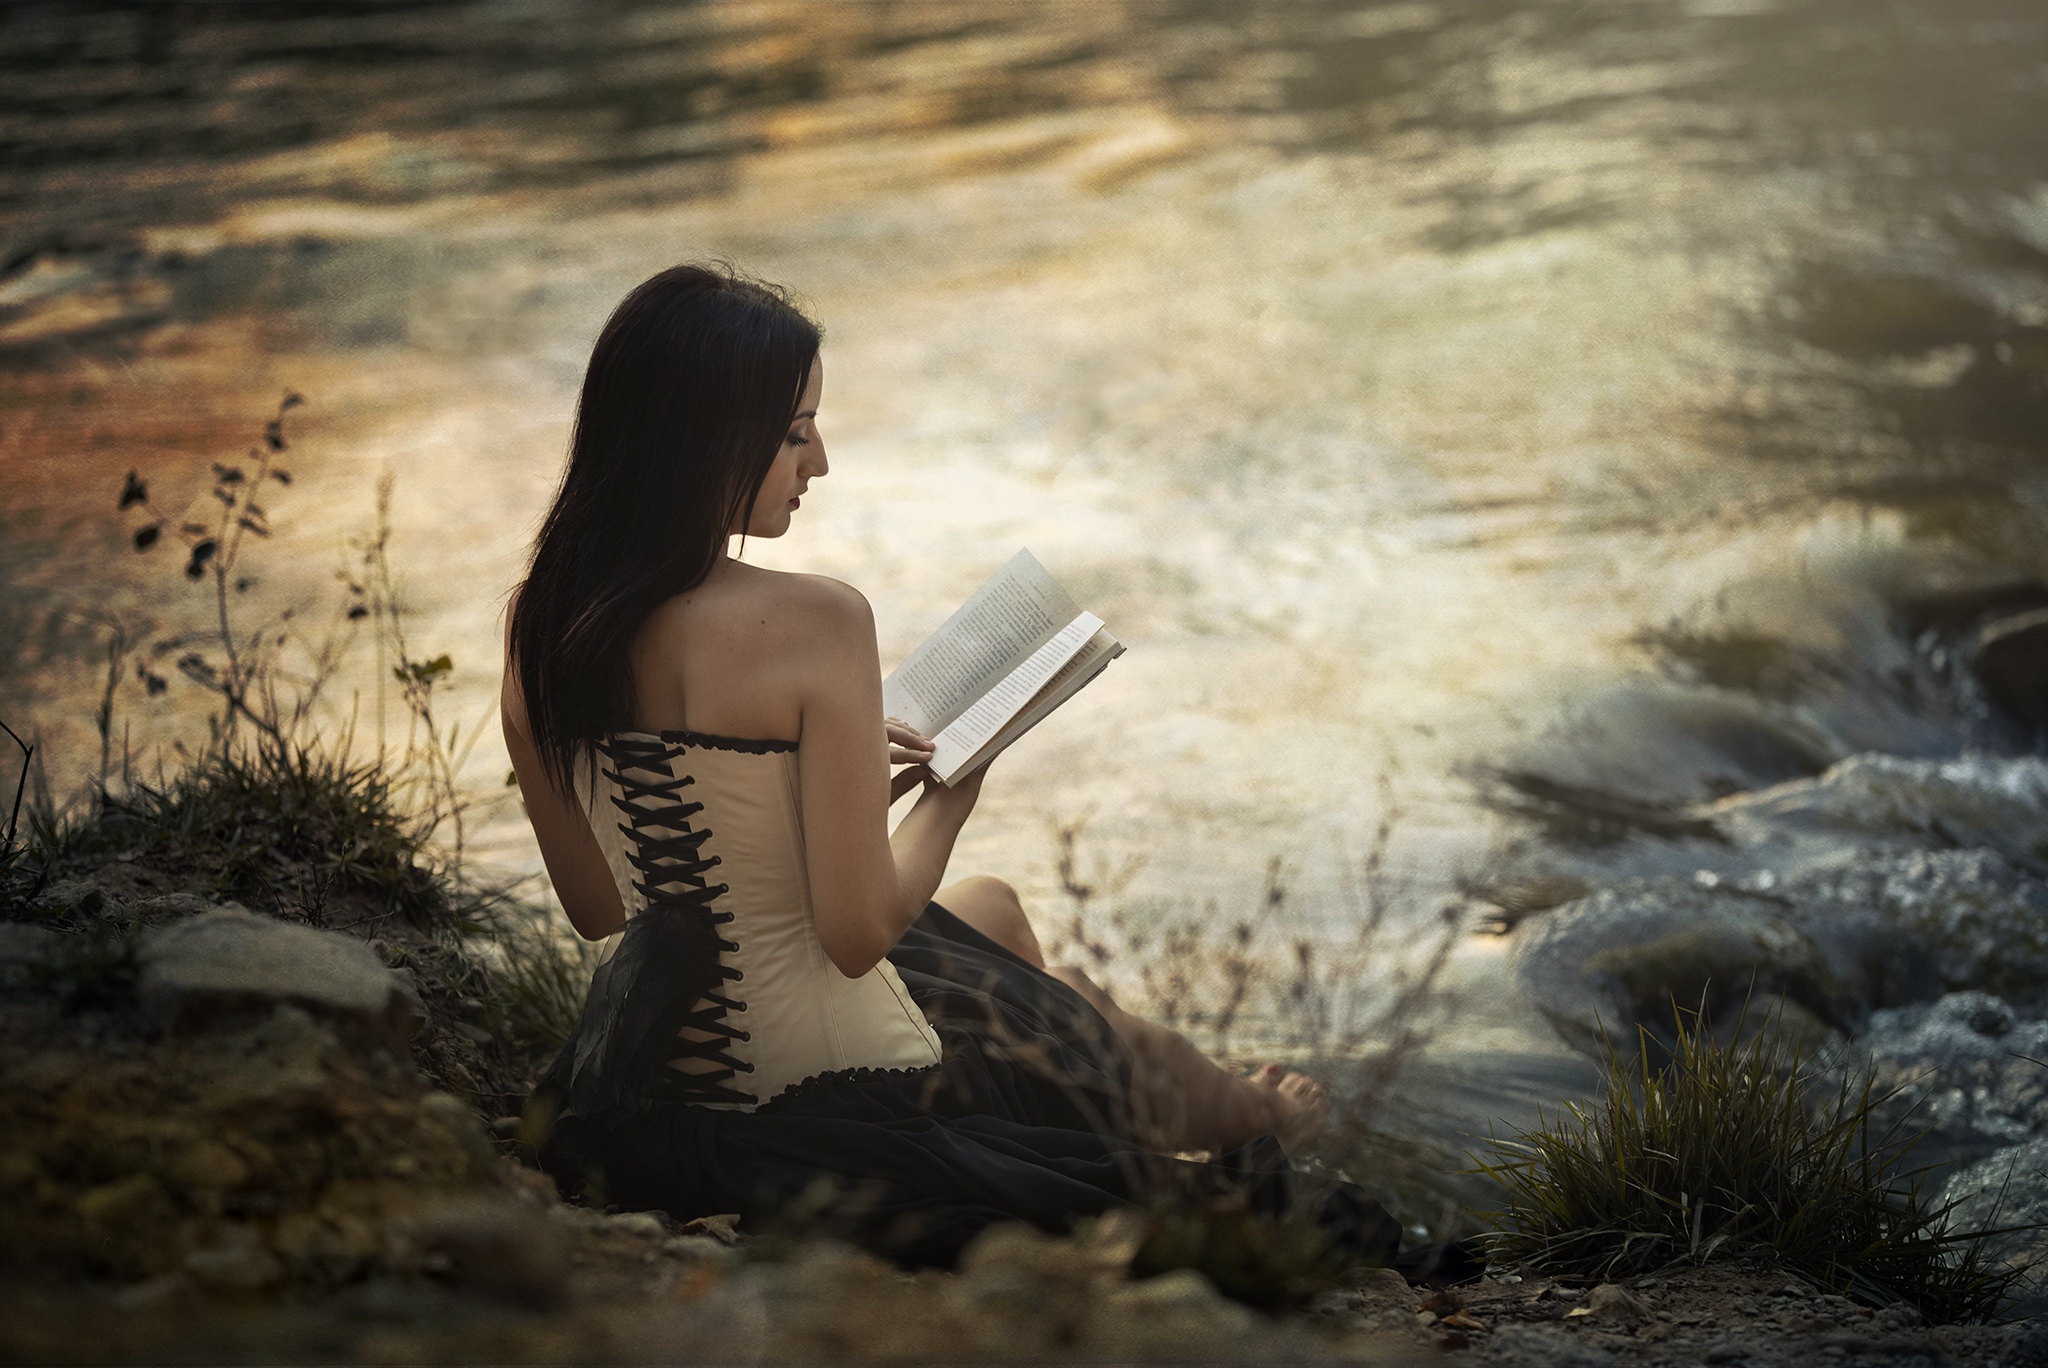 На том берегу читать. Девушка читает на берегу реки. Девушка читает на берегу. Женщина читает книгу на берегу. Девушка у берега с книгой.